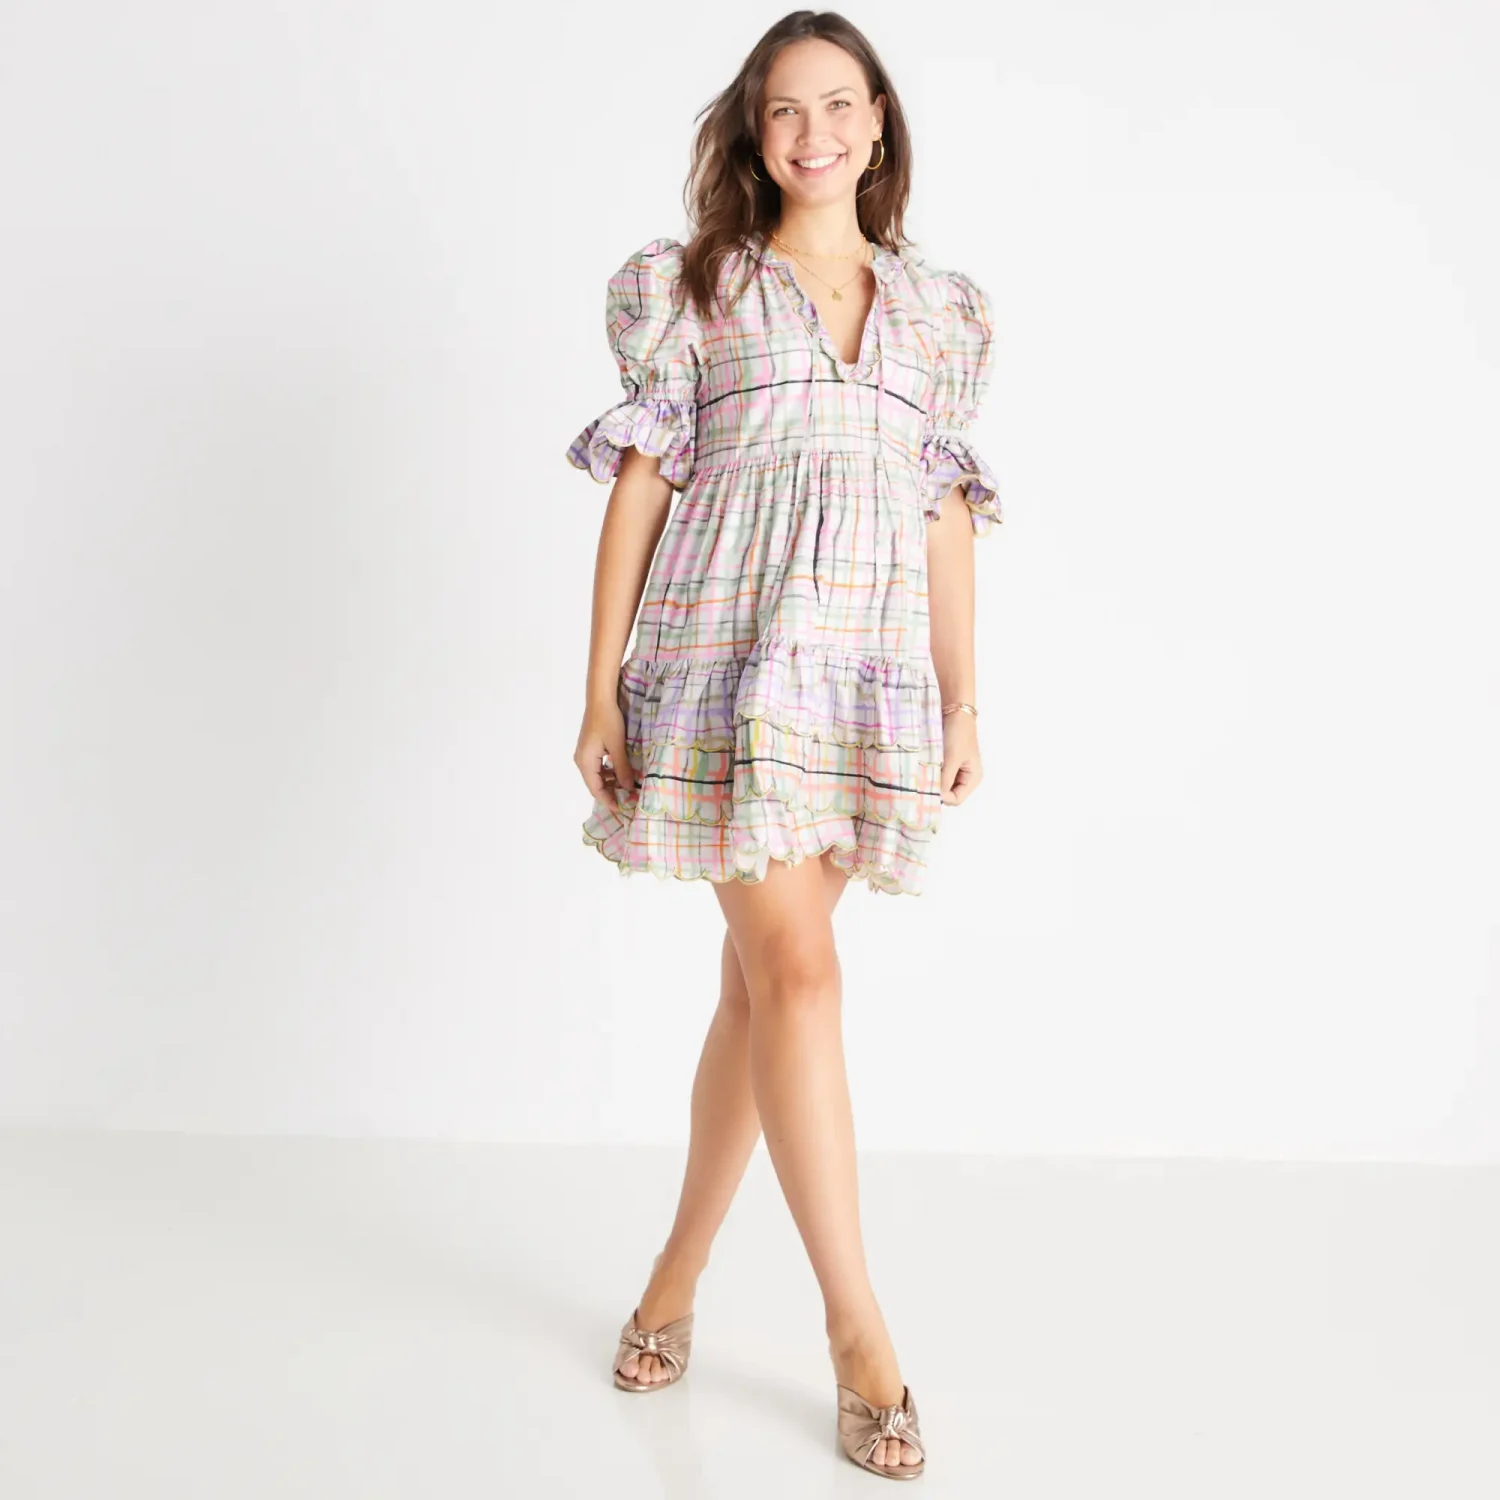 CeliaB brand contemporary and stylish maternity friendly printed mini dresses